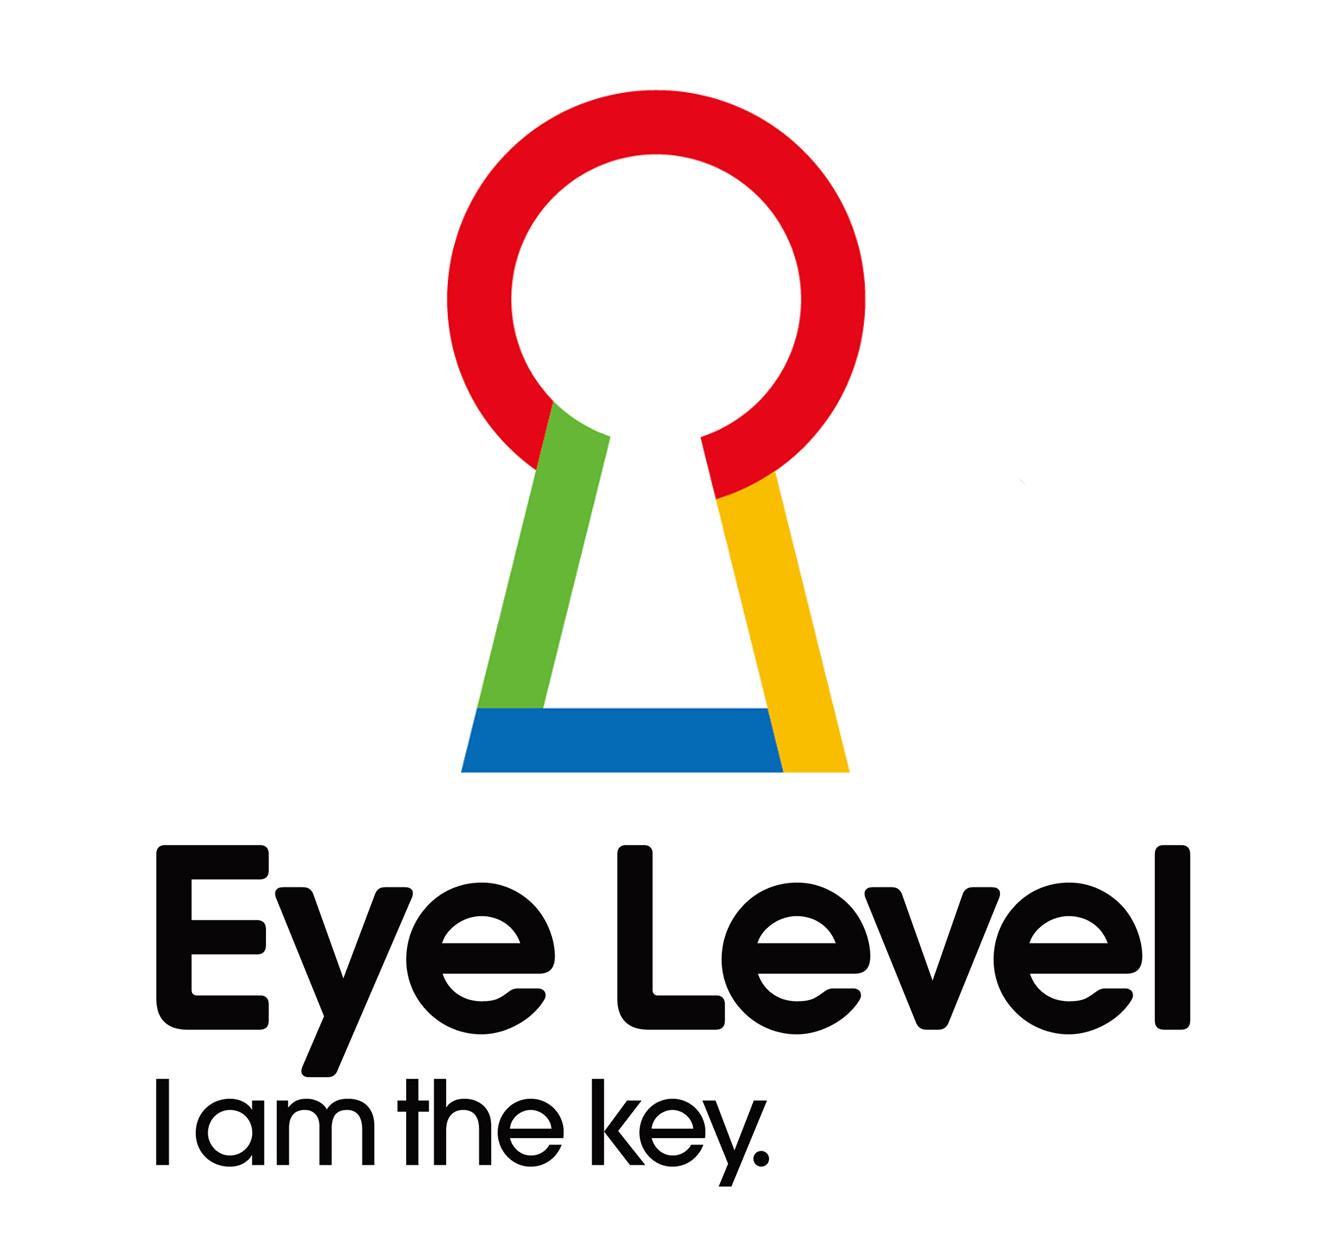 Eye Level